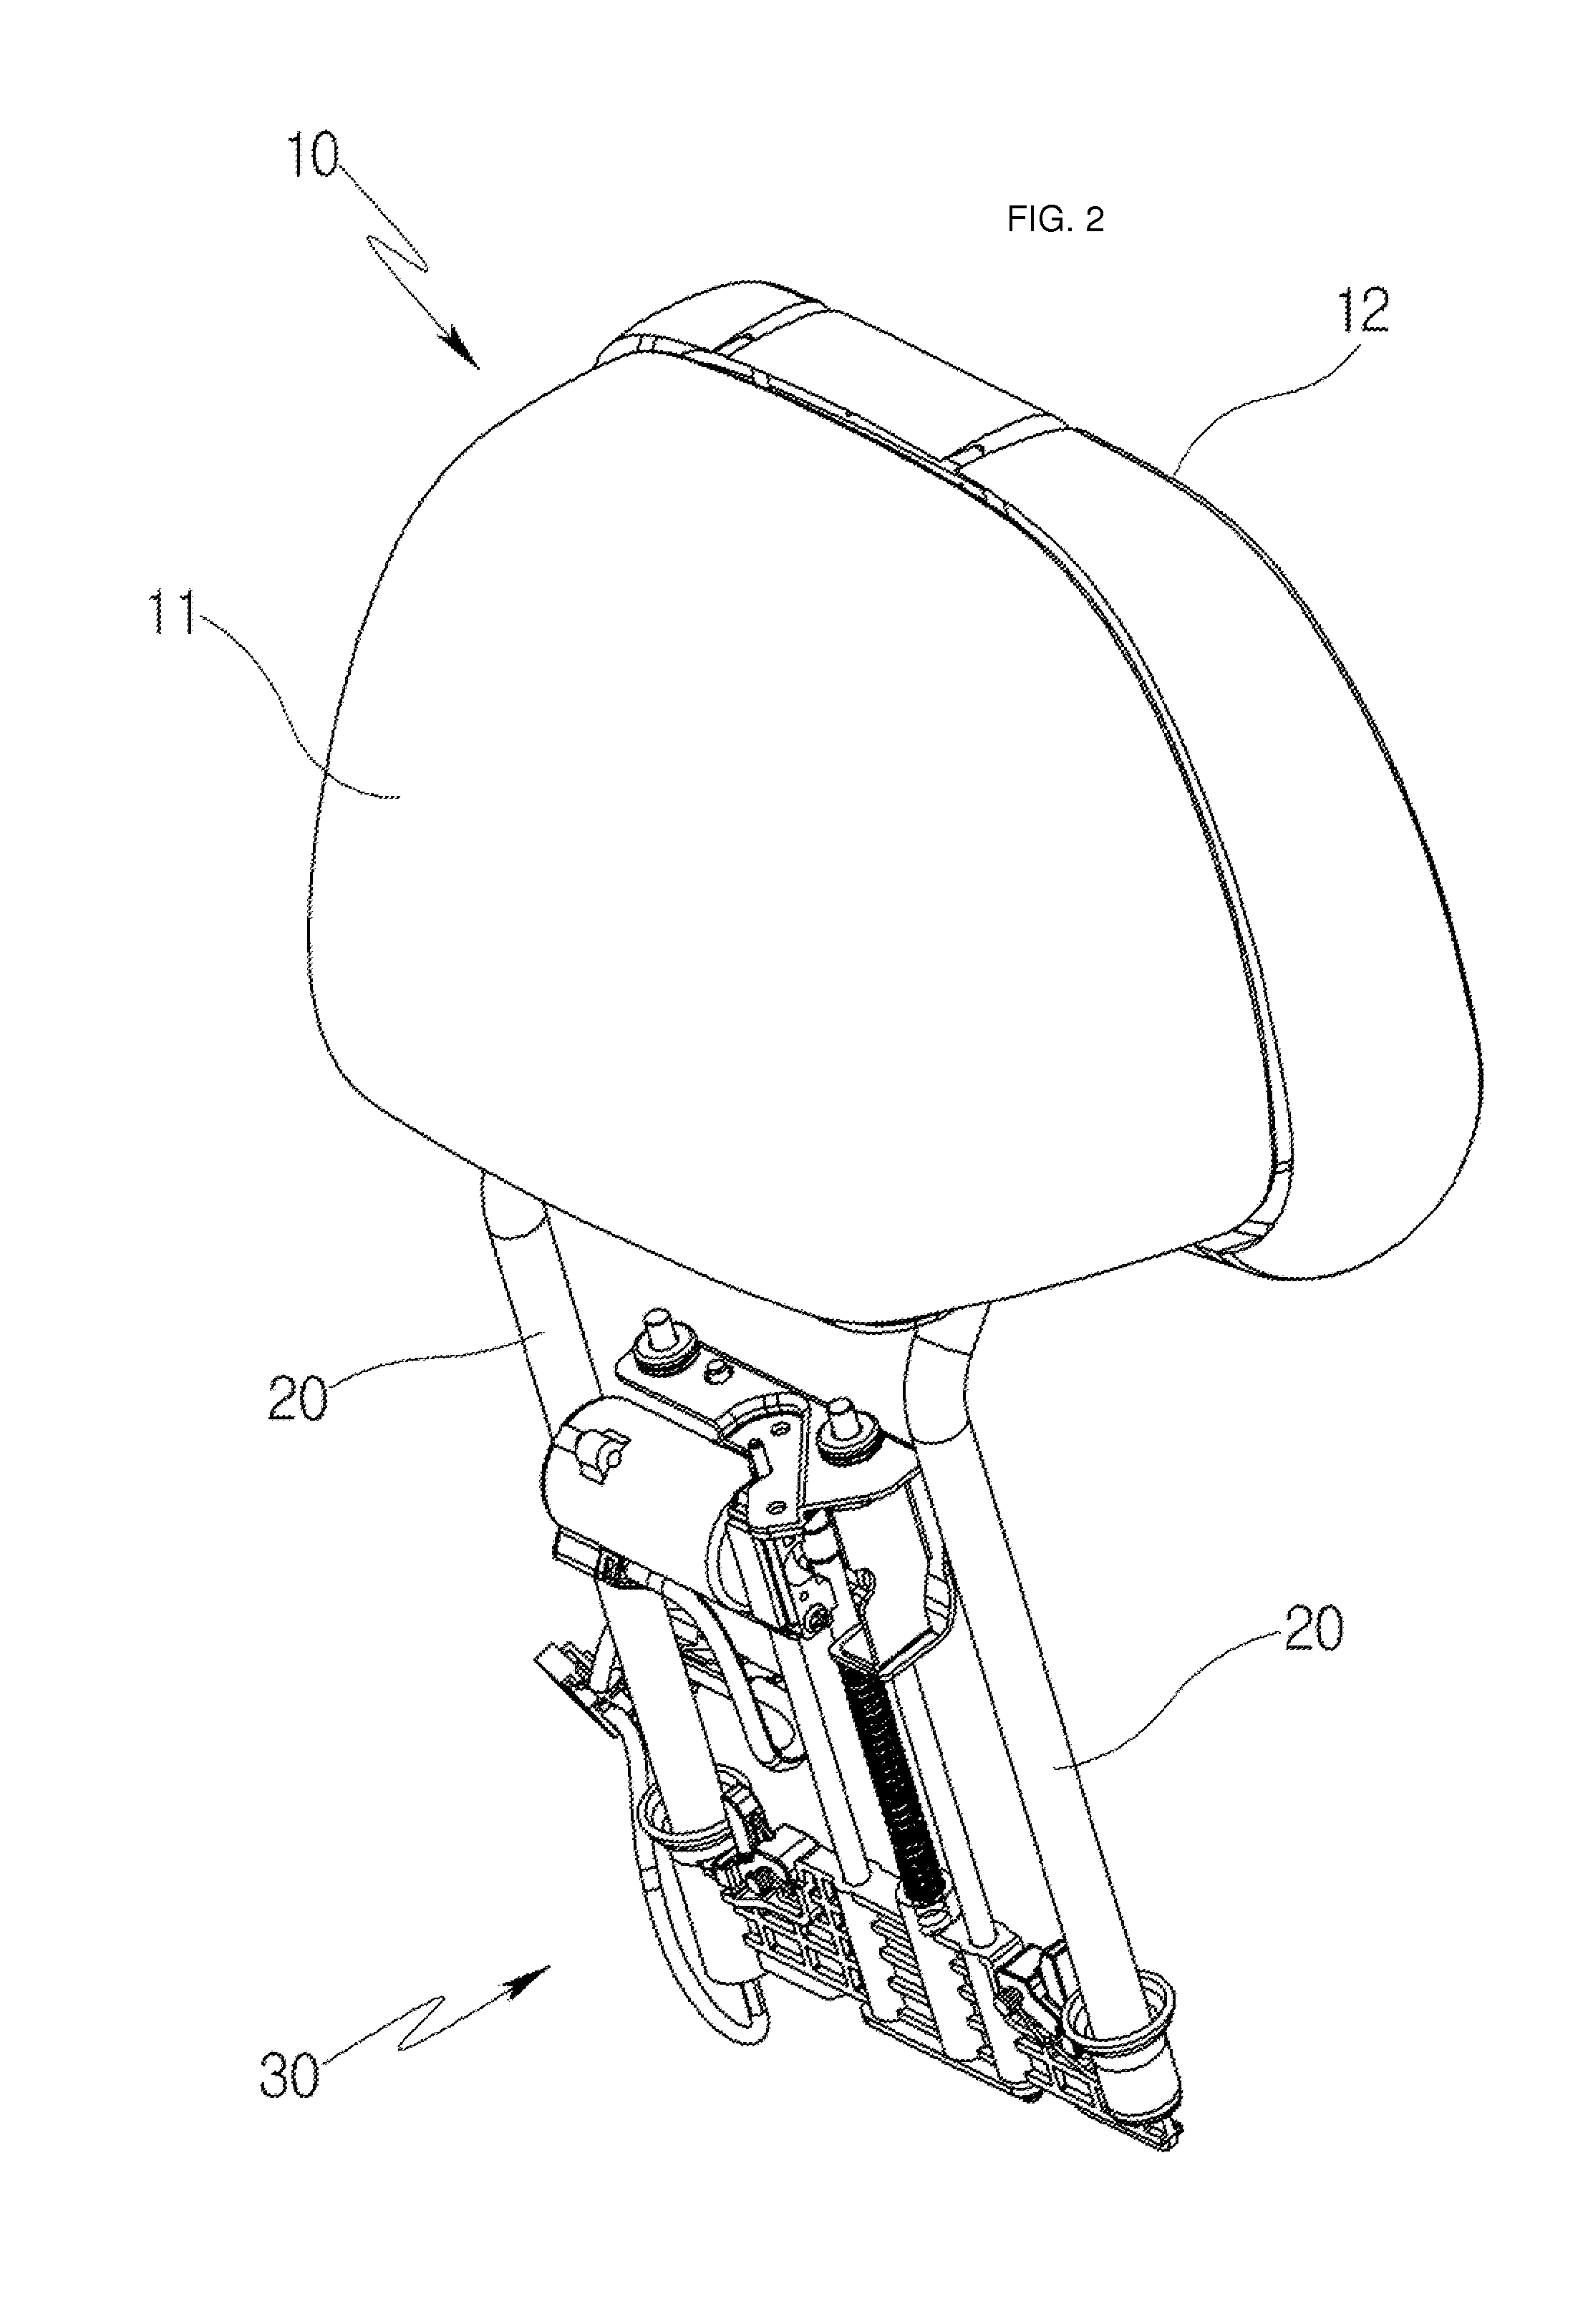 Power headrest apparatus